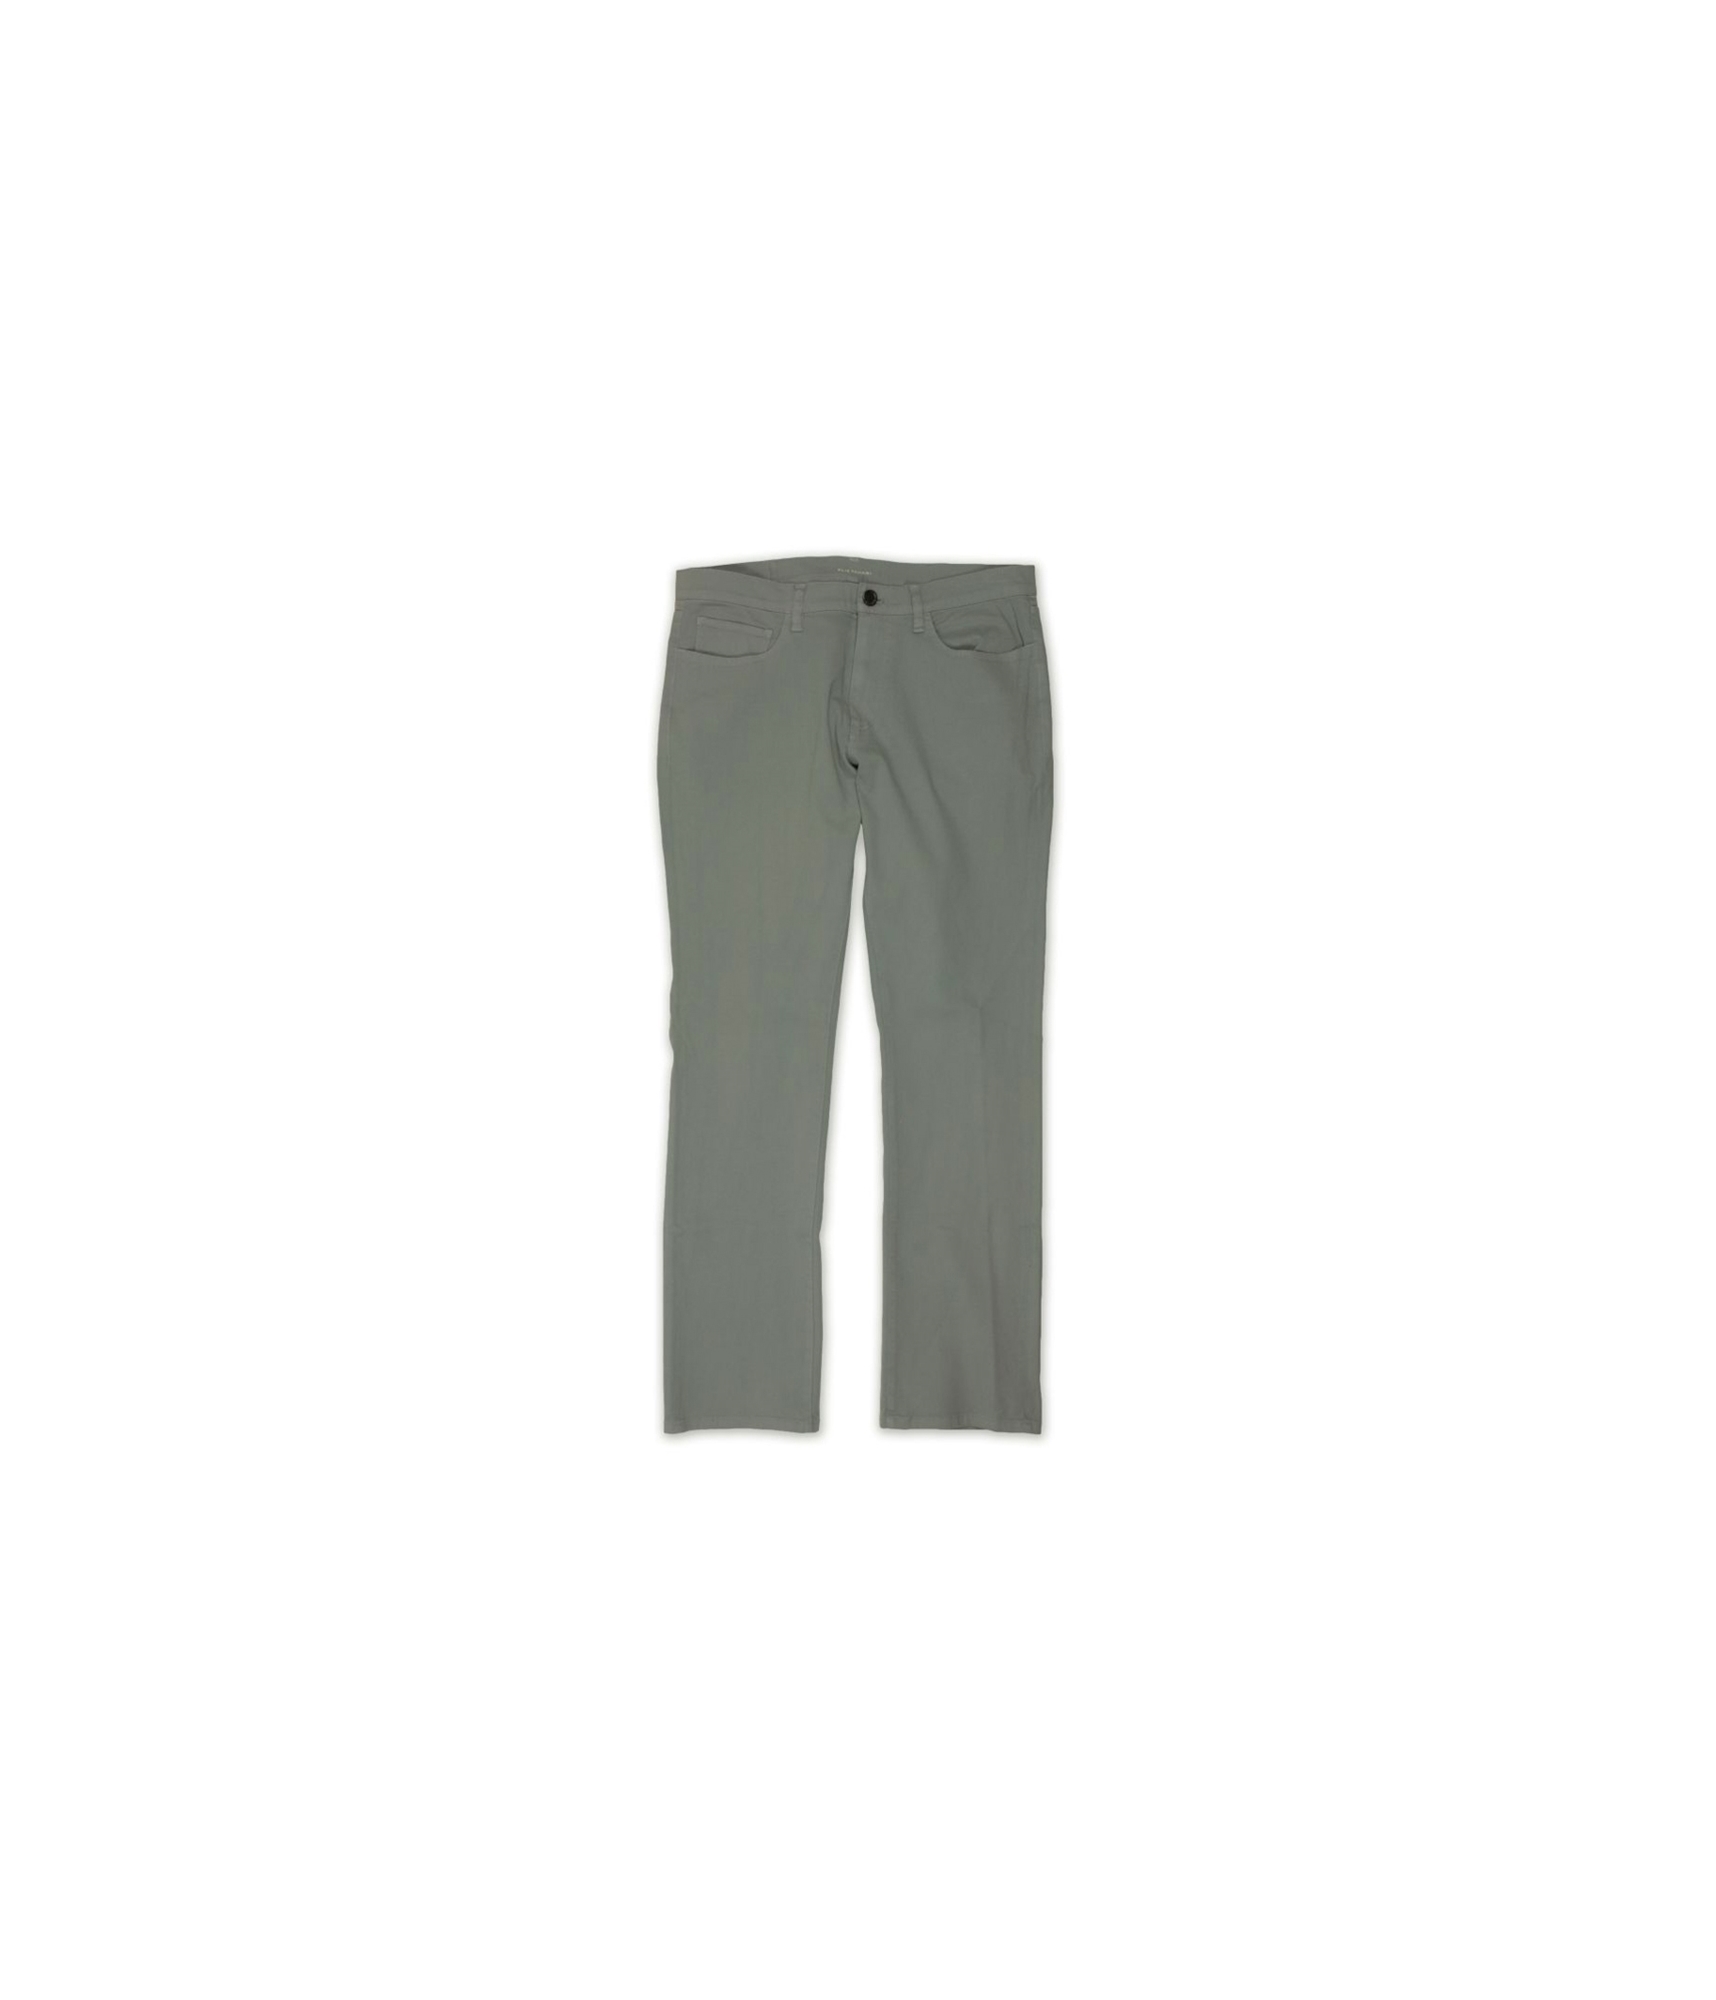 Buy a Mens Elie Tahari Duncan Casual Chino Pants Online | TagsWeekly.com